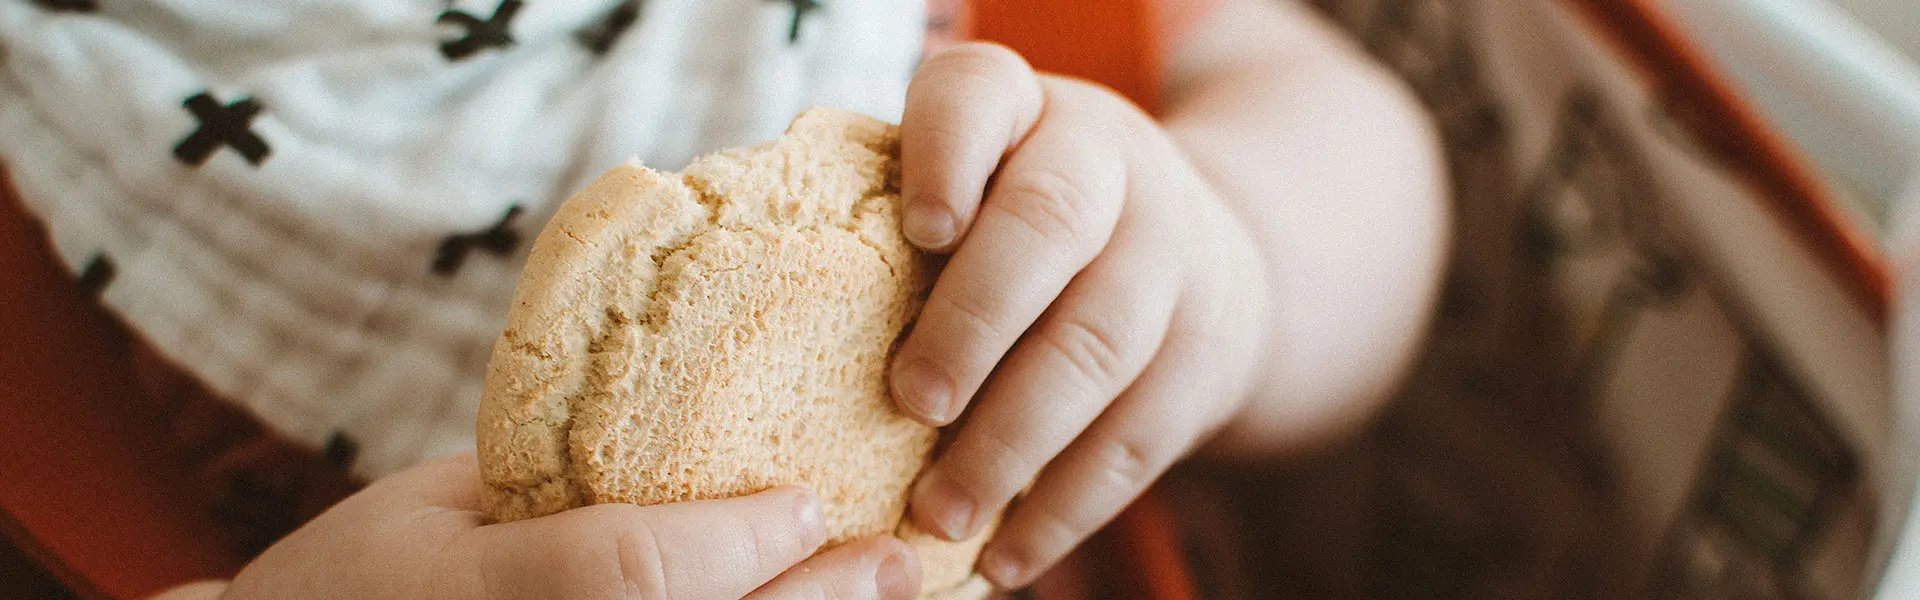 Child holding bread crust